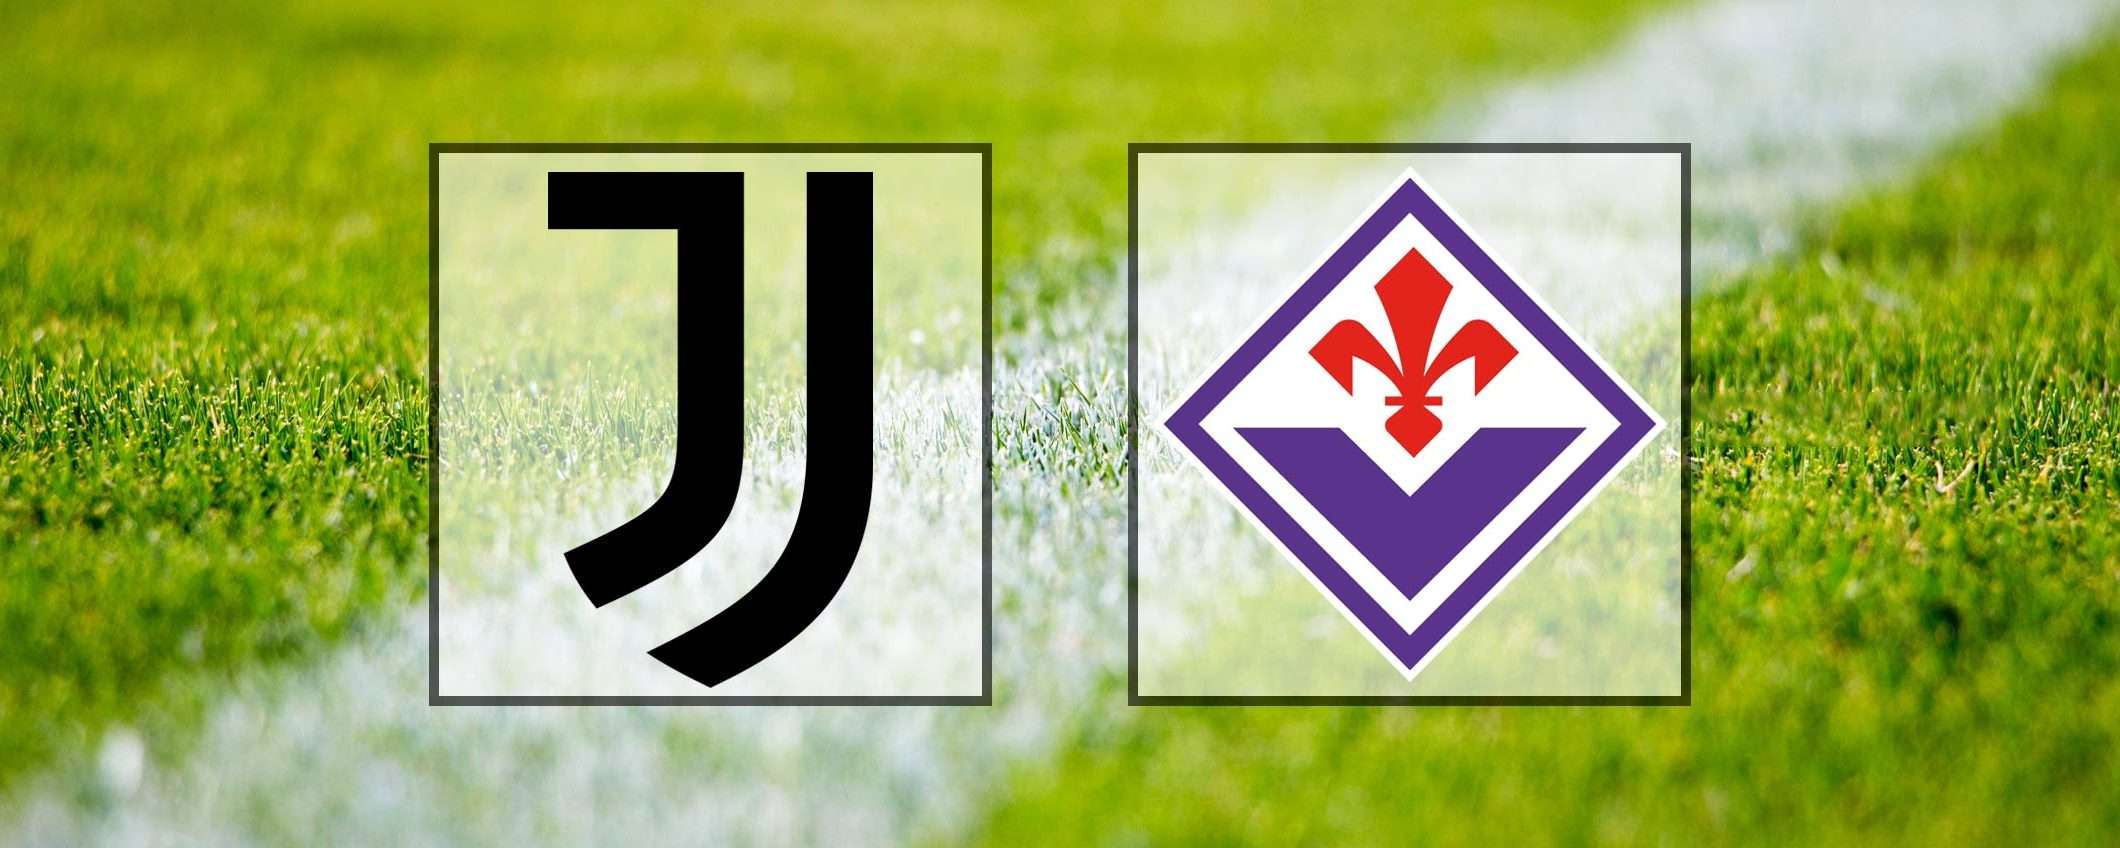 Come vedere Juventus-Fiorentina in streaming